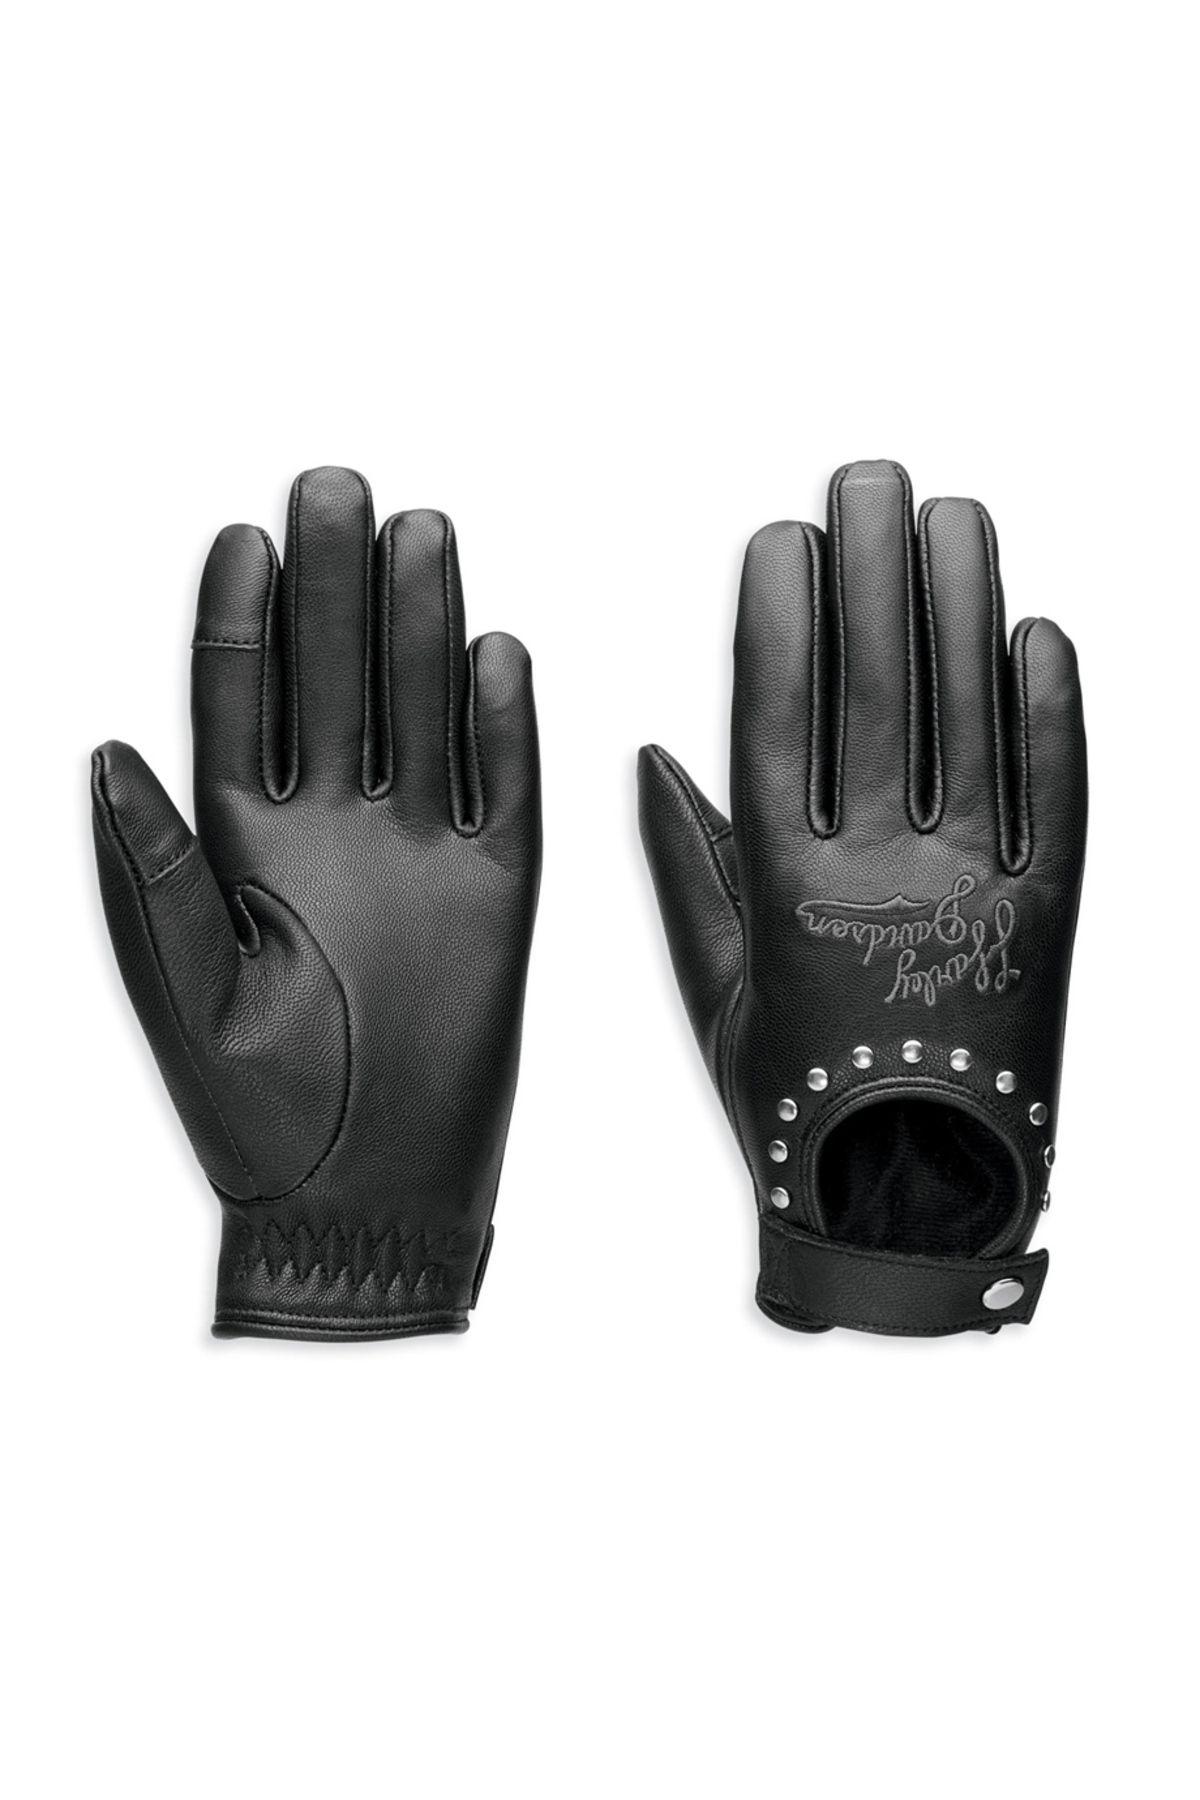 Harley Davidson Harley-davidson Women's Open Road Leather Glove